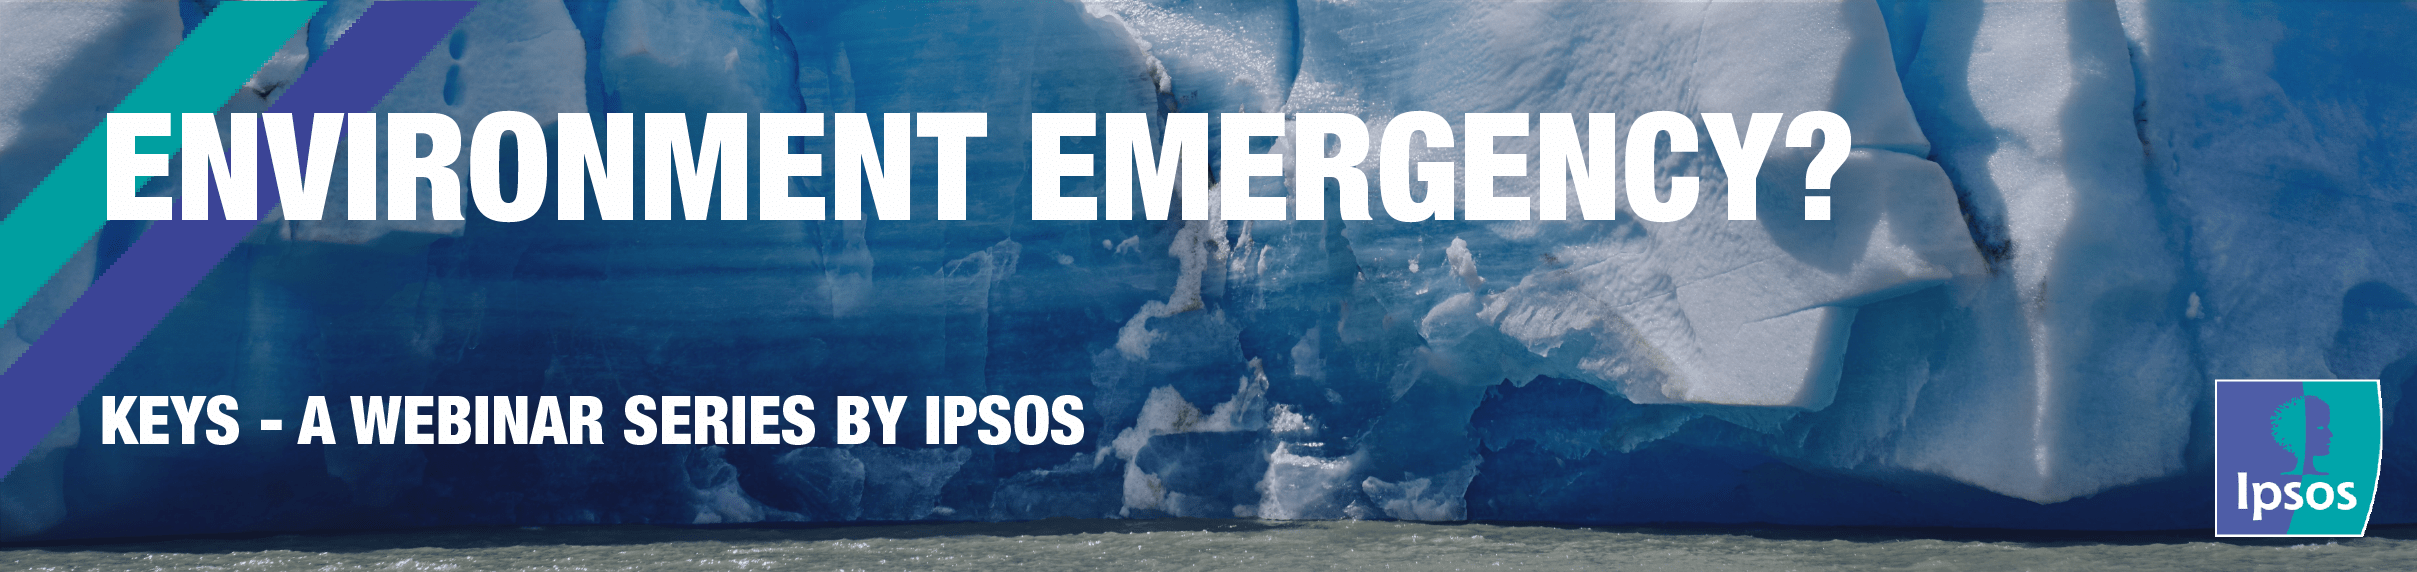 KEYS - environment emergency | Ipsos